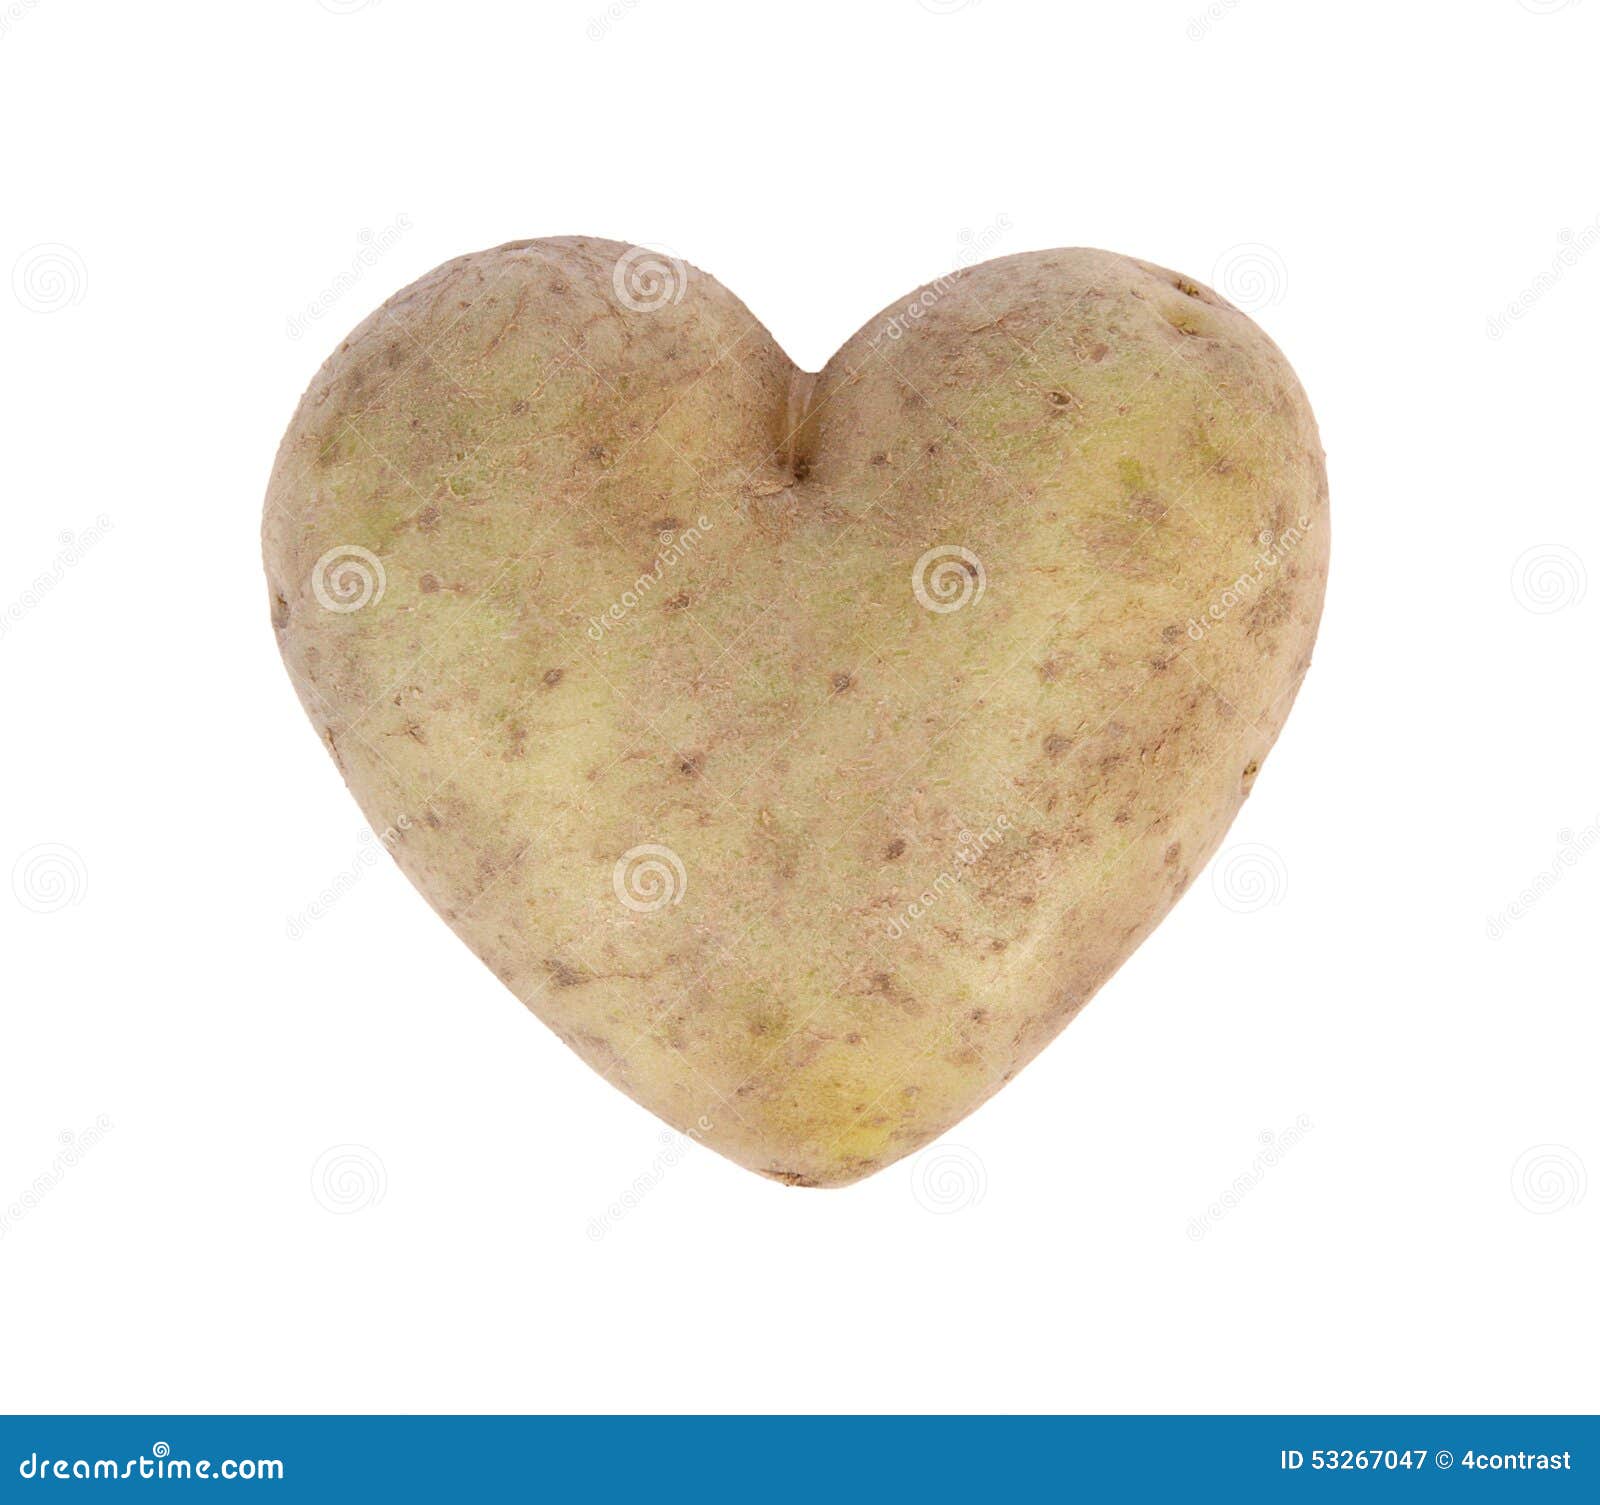 heart d potato spud, studio shot